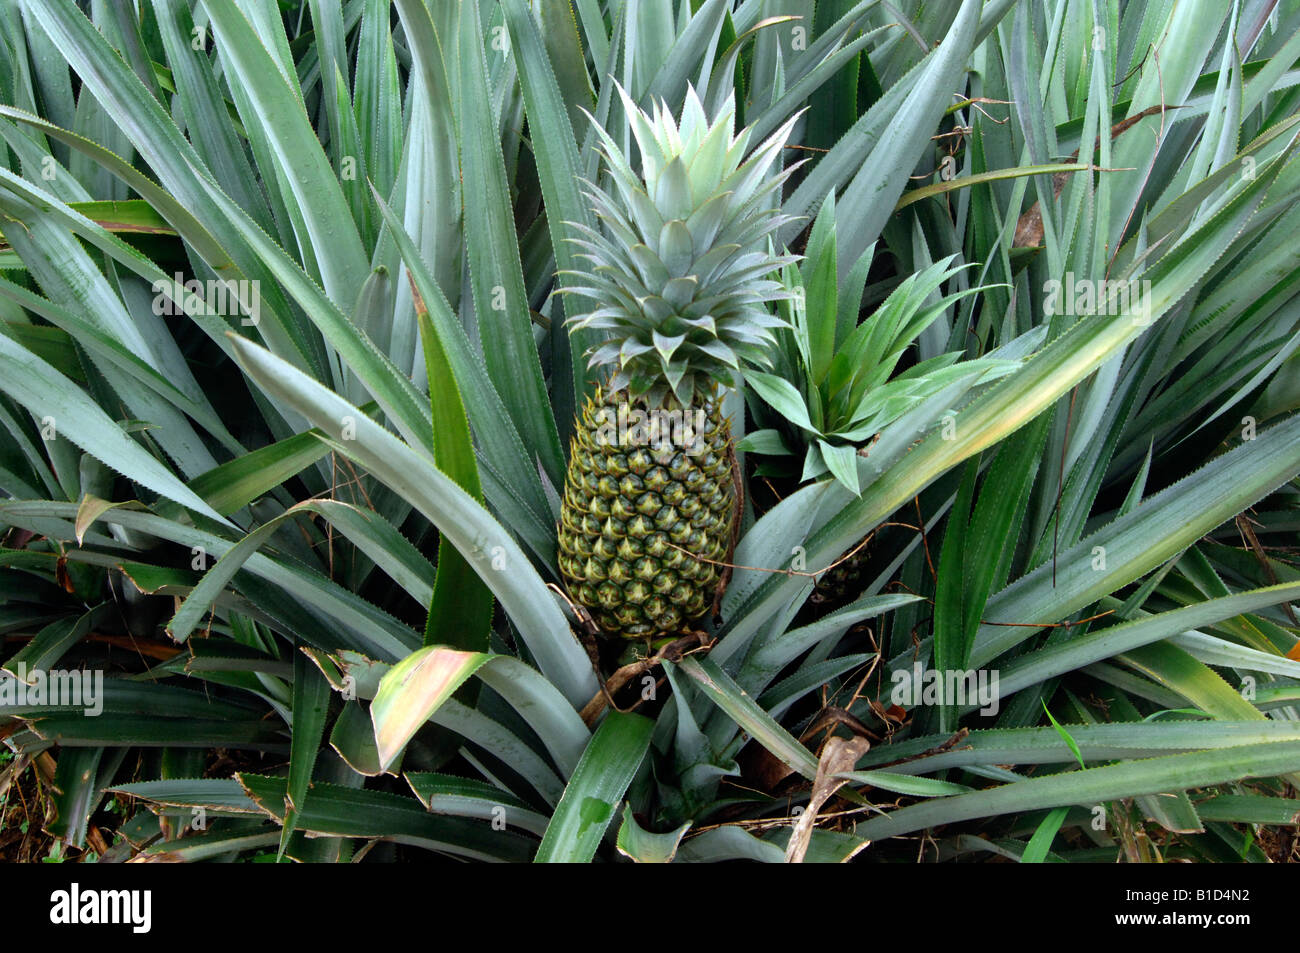 A Pineapple Ananas Comosus On Its Plant Stock Photo Alamy